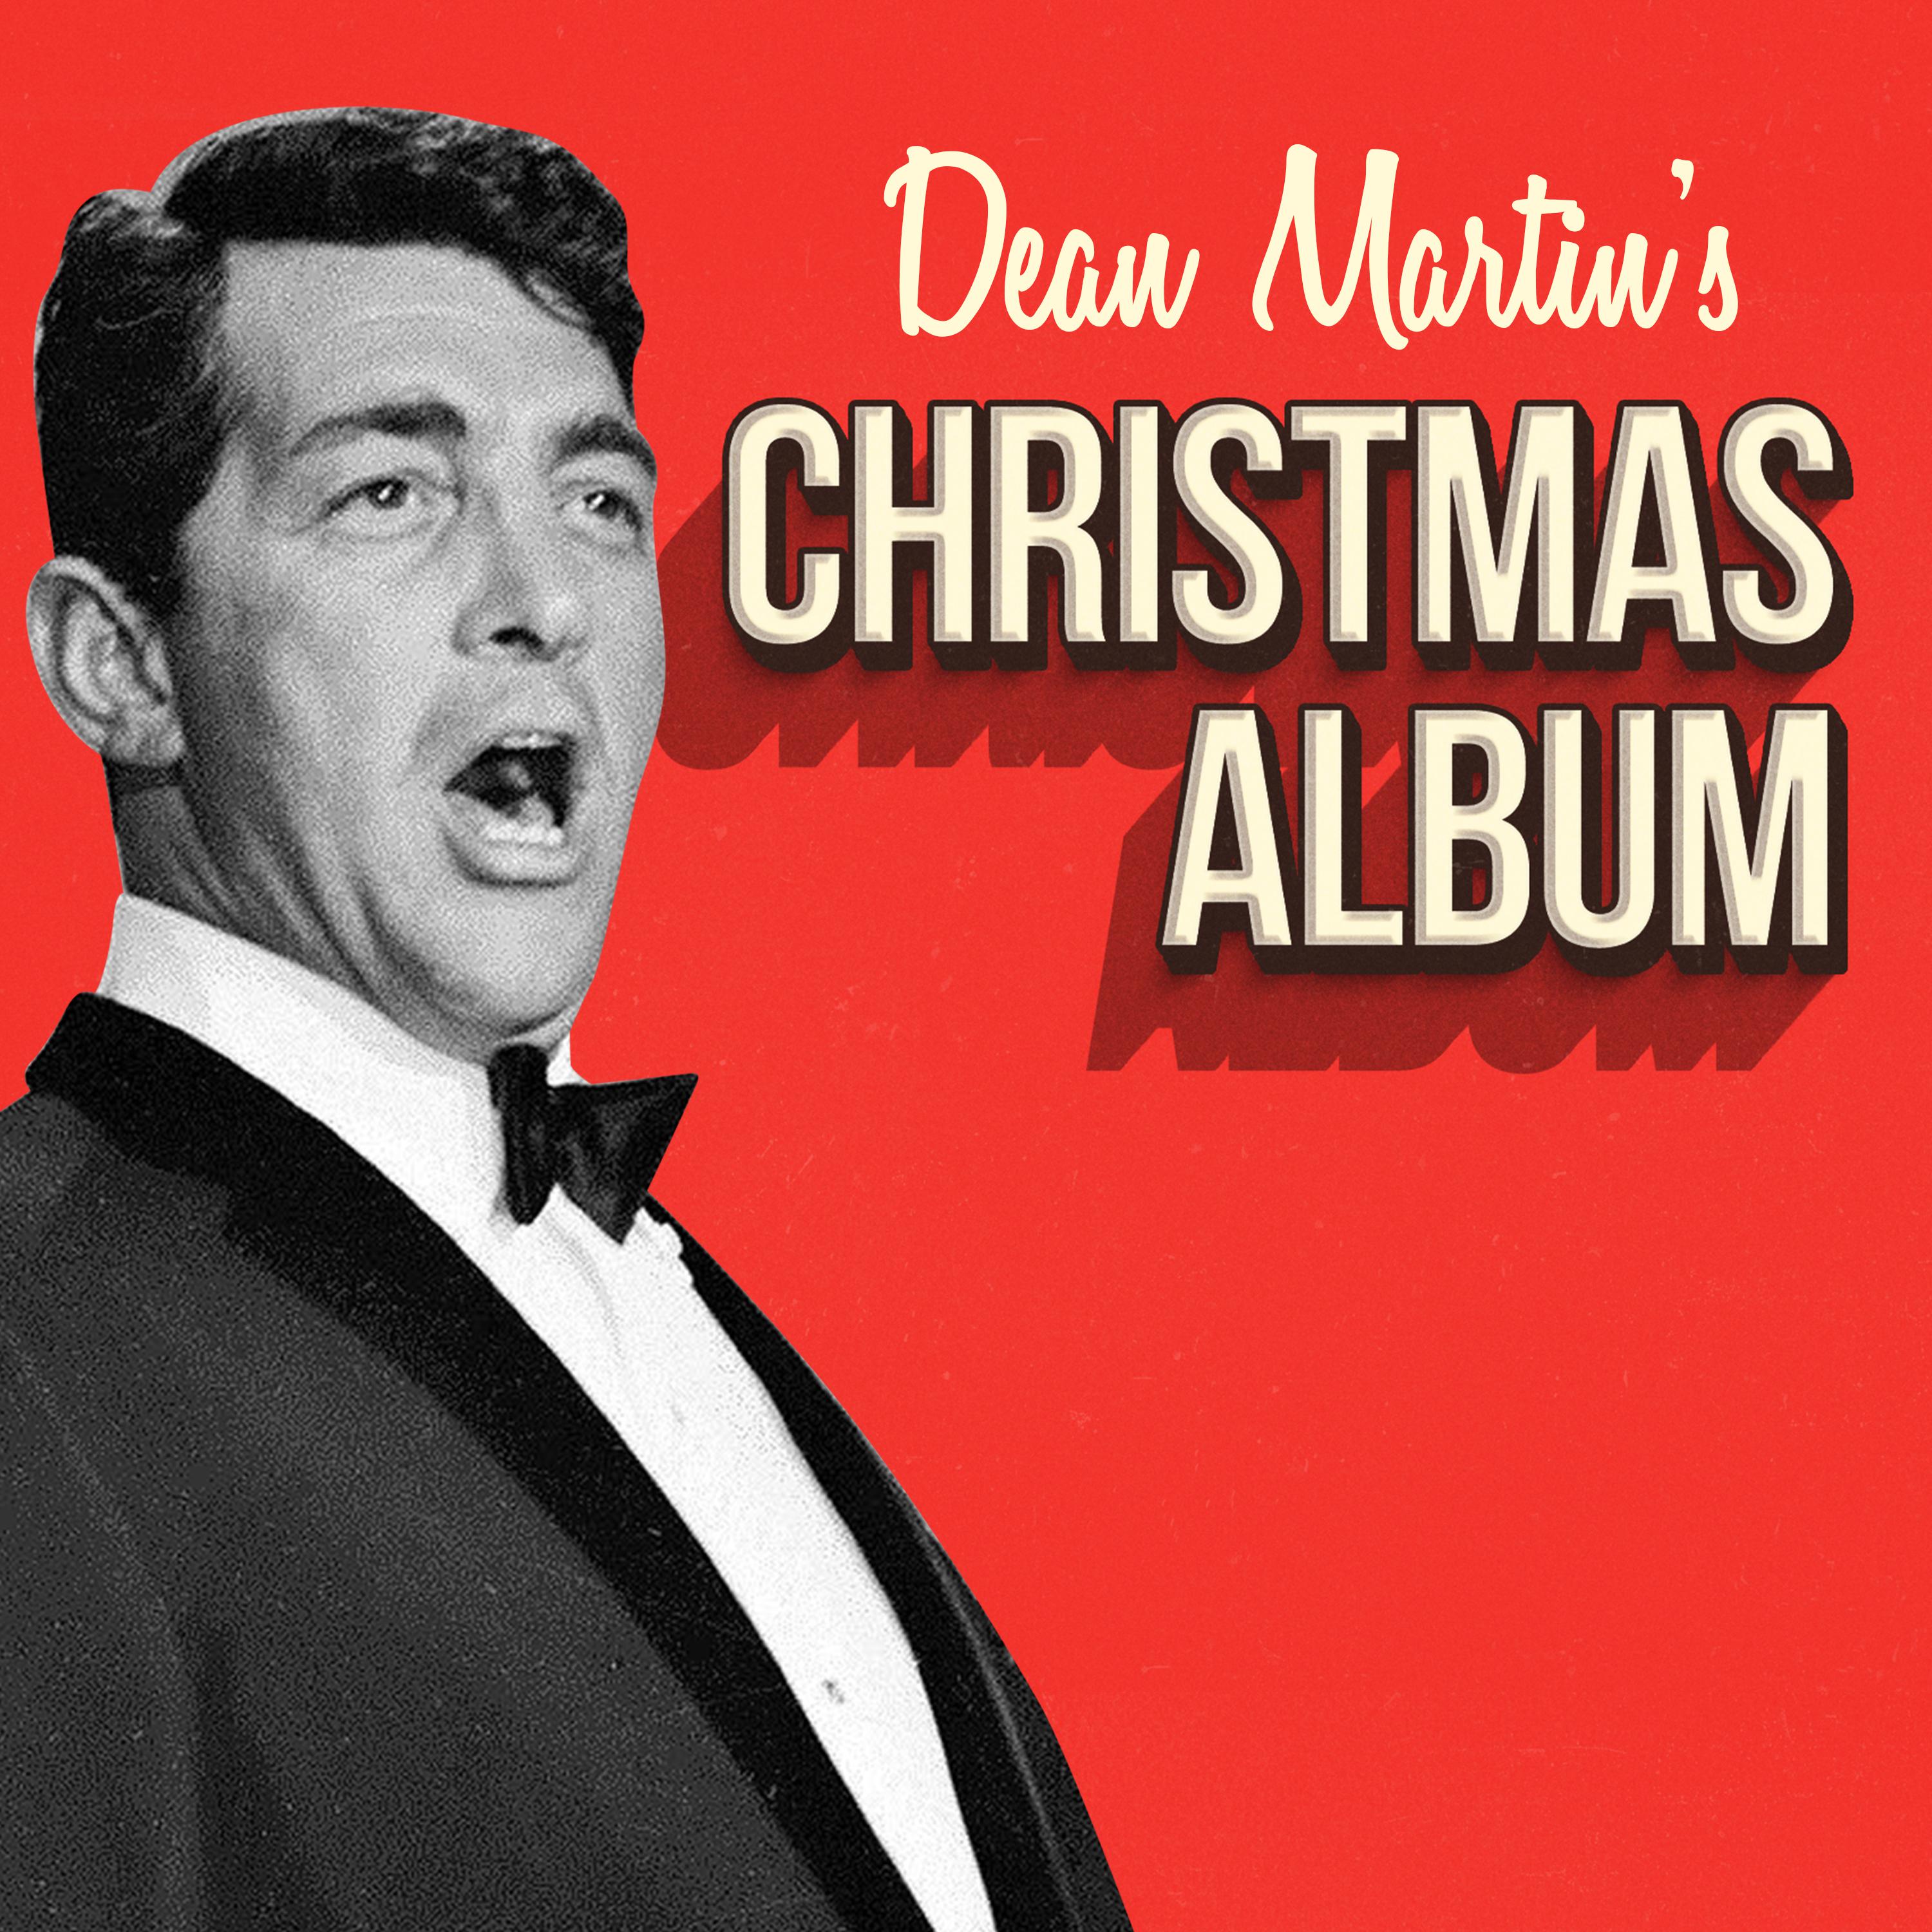 Dean Martin's Christmas Album